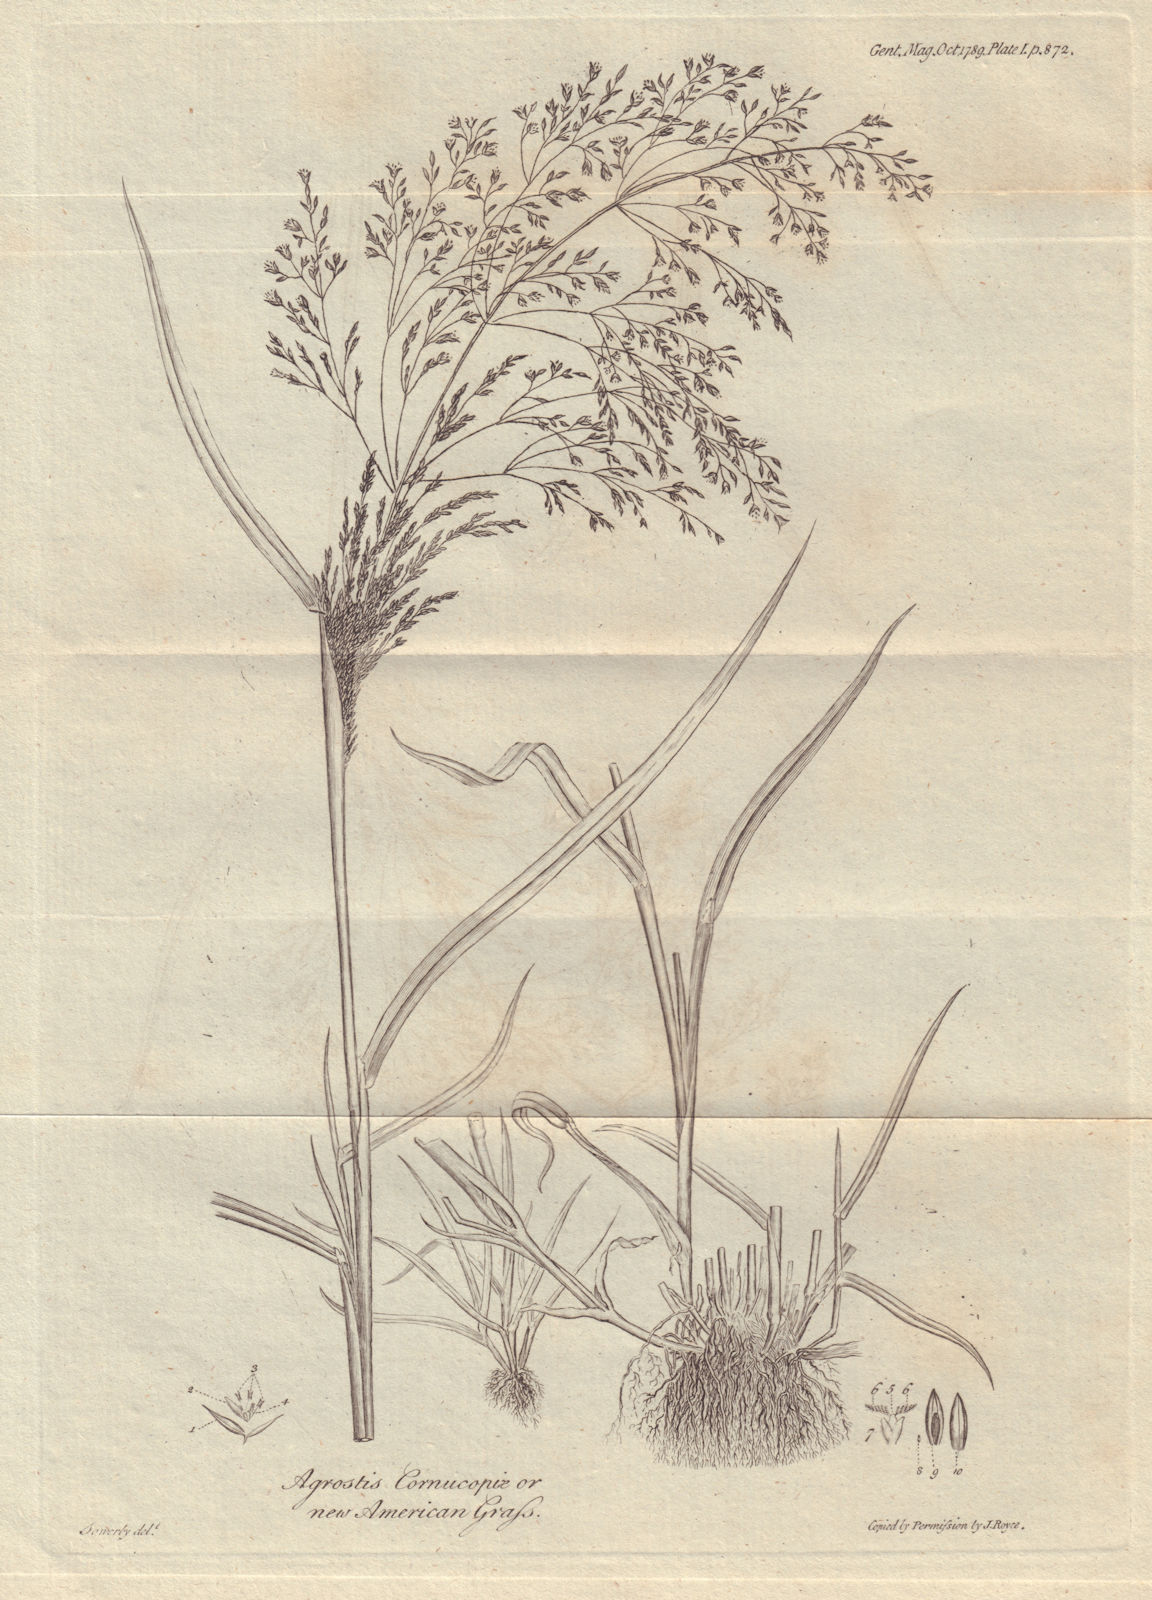 Associate Product Agrostis Cornucopiae or new American Grass. Carolina Grass Plant 1789 print